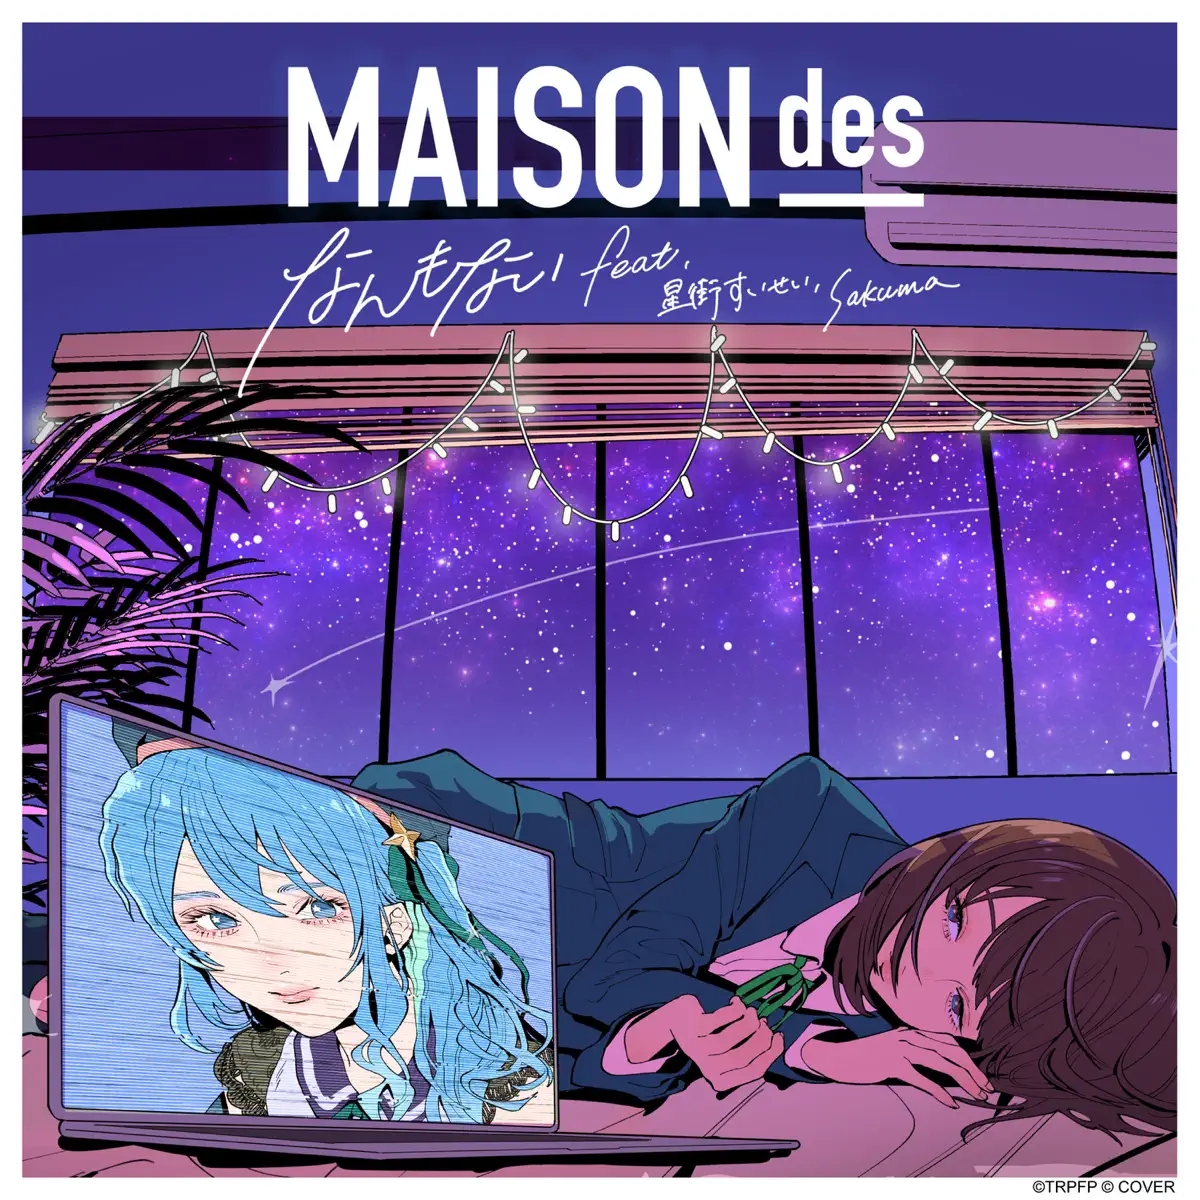 MAISONdes - なんもない (feat. 星街すいせい & SAKUMA) - Single (2024) [iTunes Plus AAC M4A]-新房子